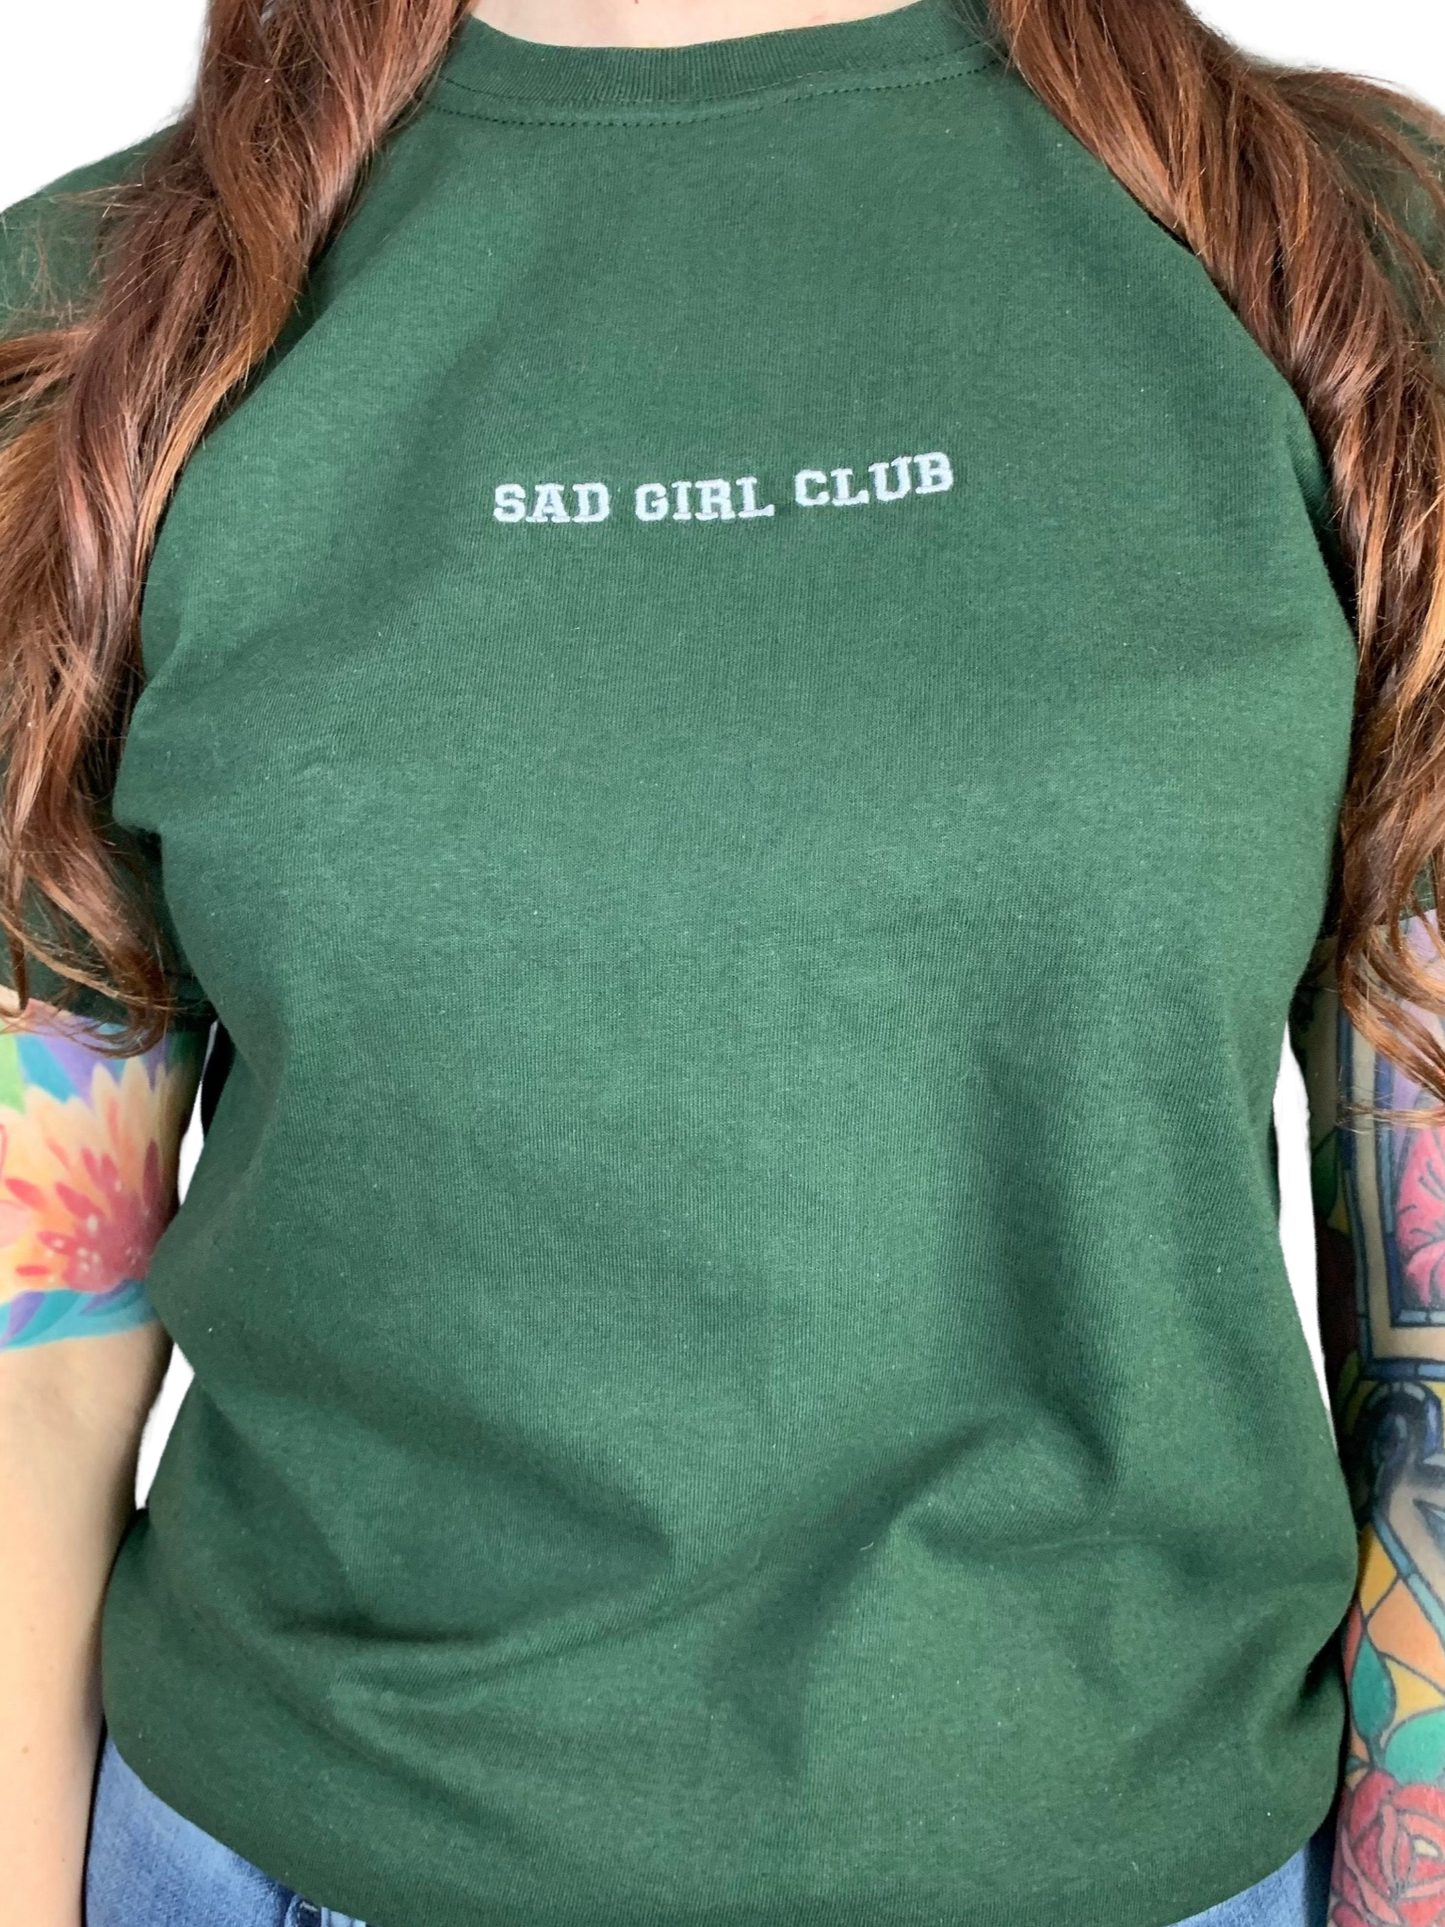 Sad Girl Club Tee